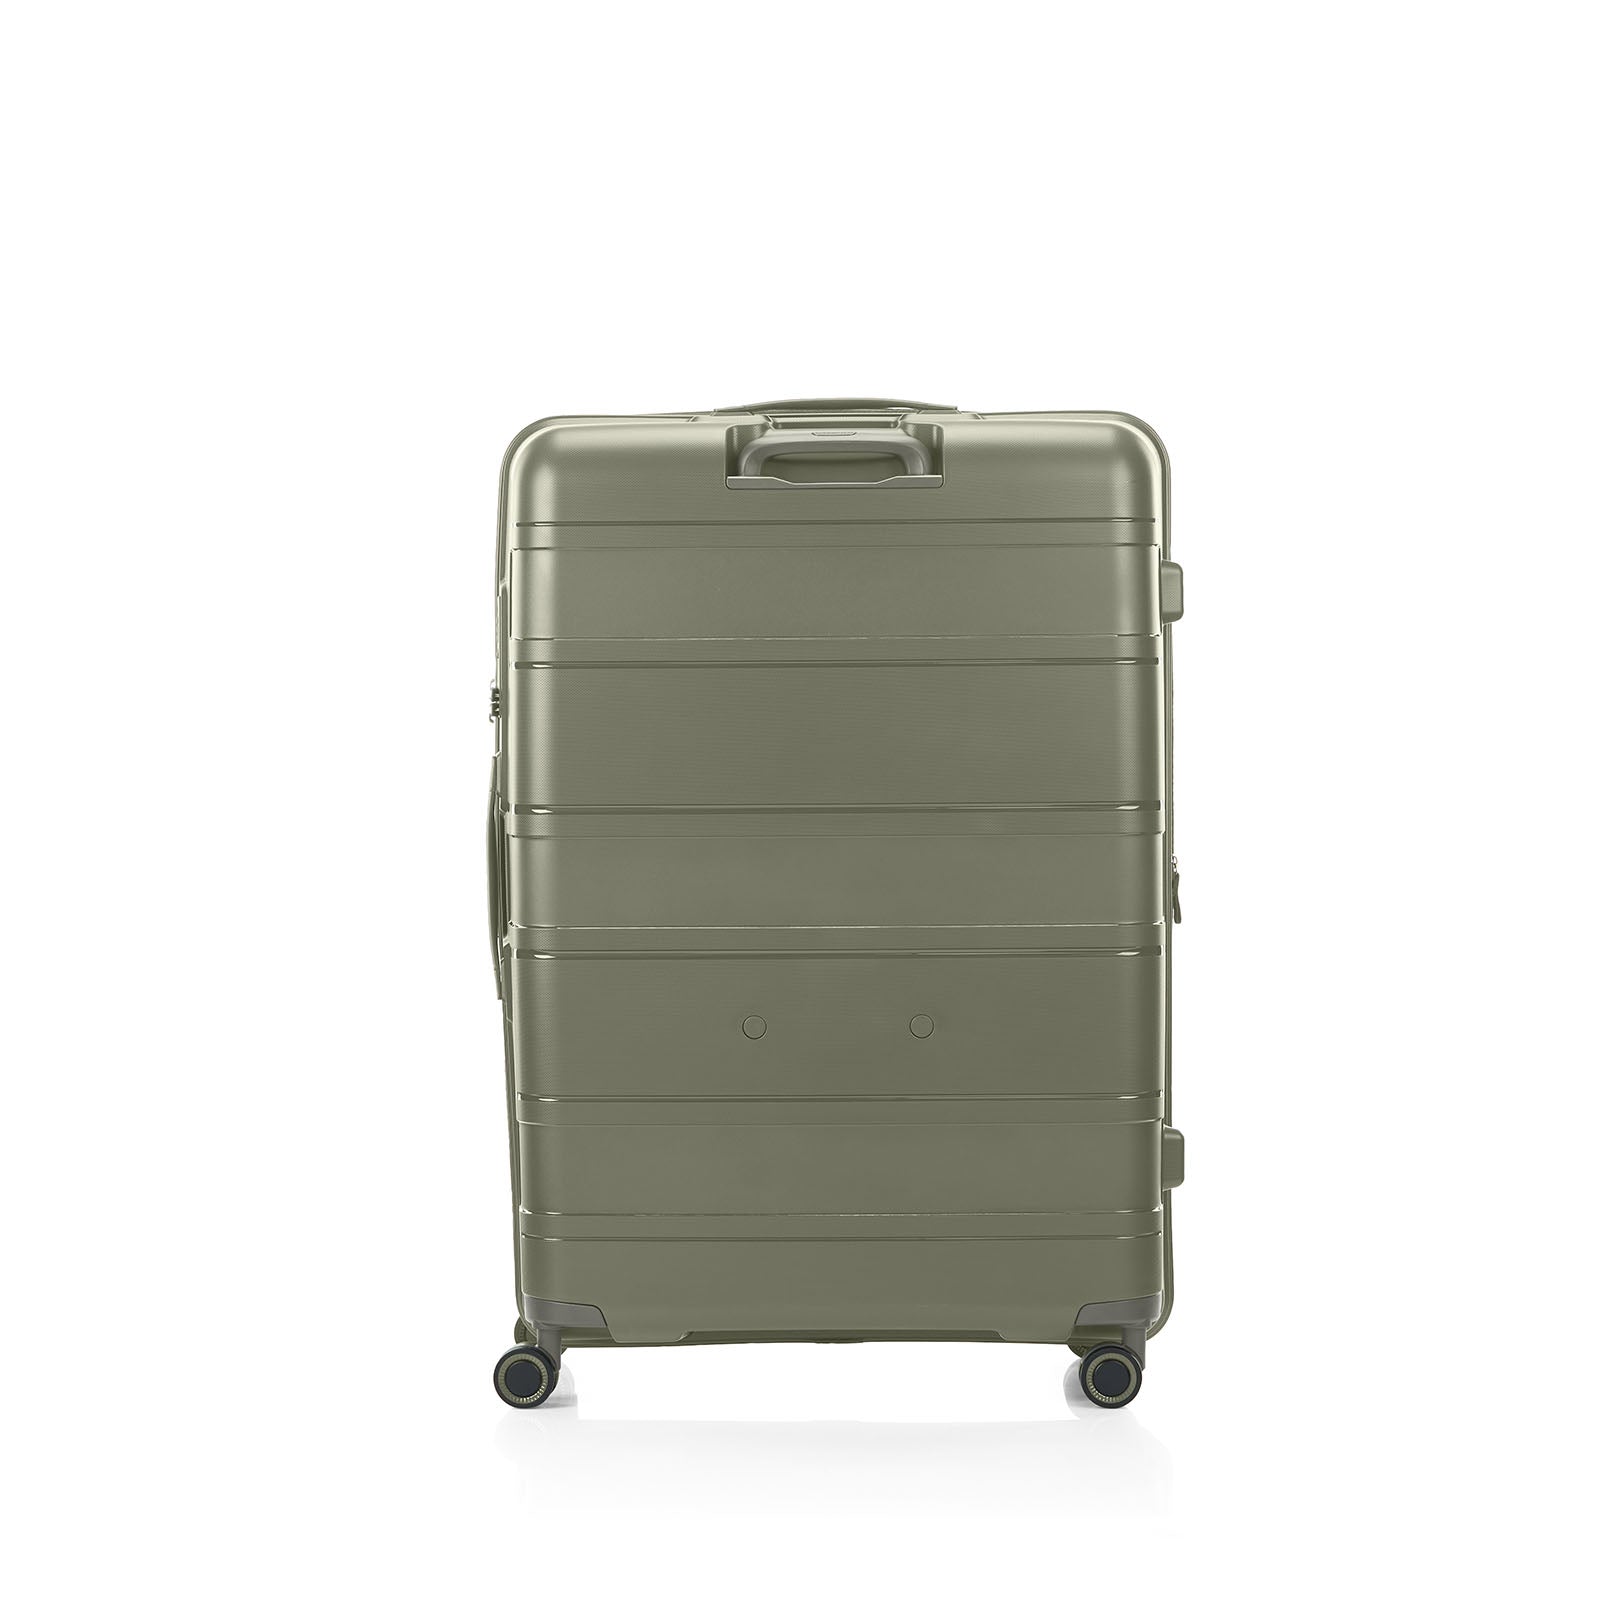 American-Tourister-Light-Max-82cm-Suitcase-Khaki-Back